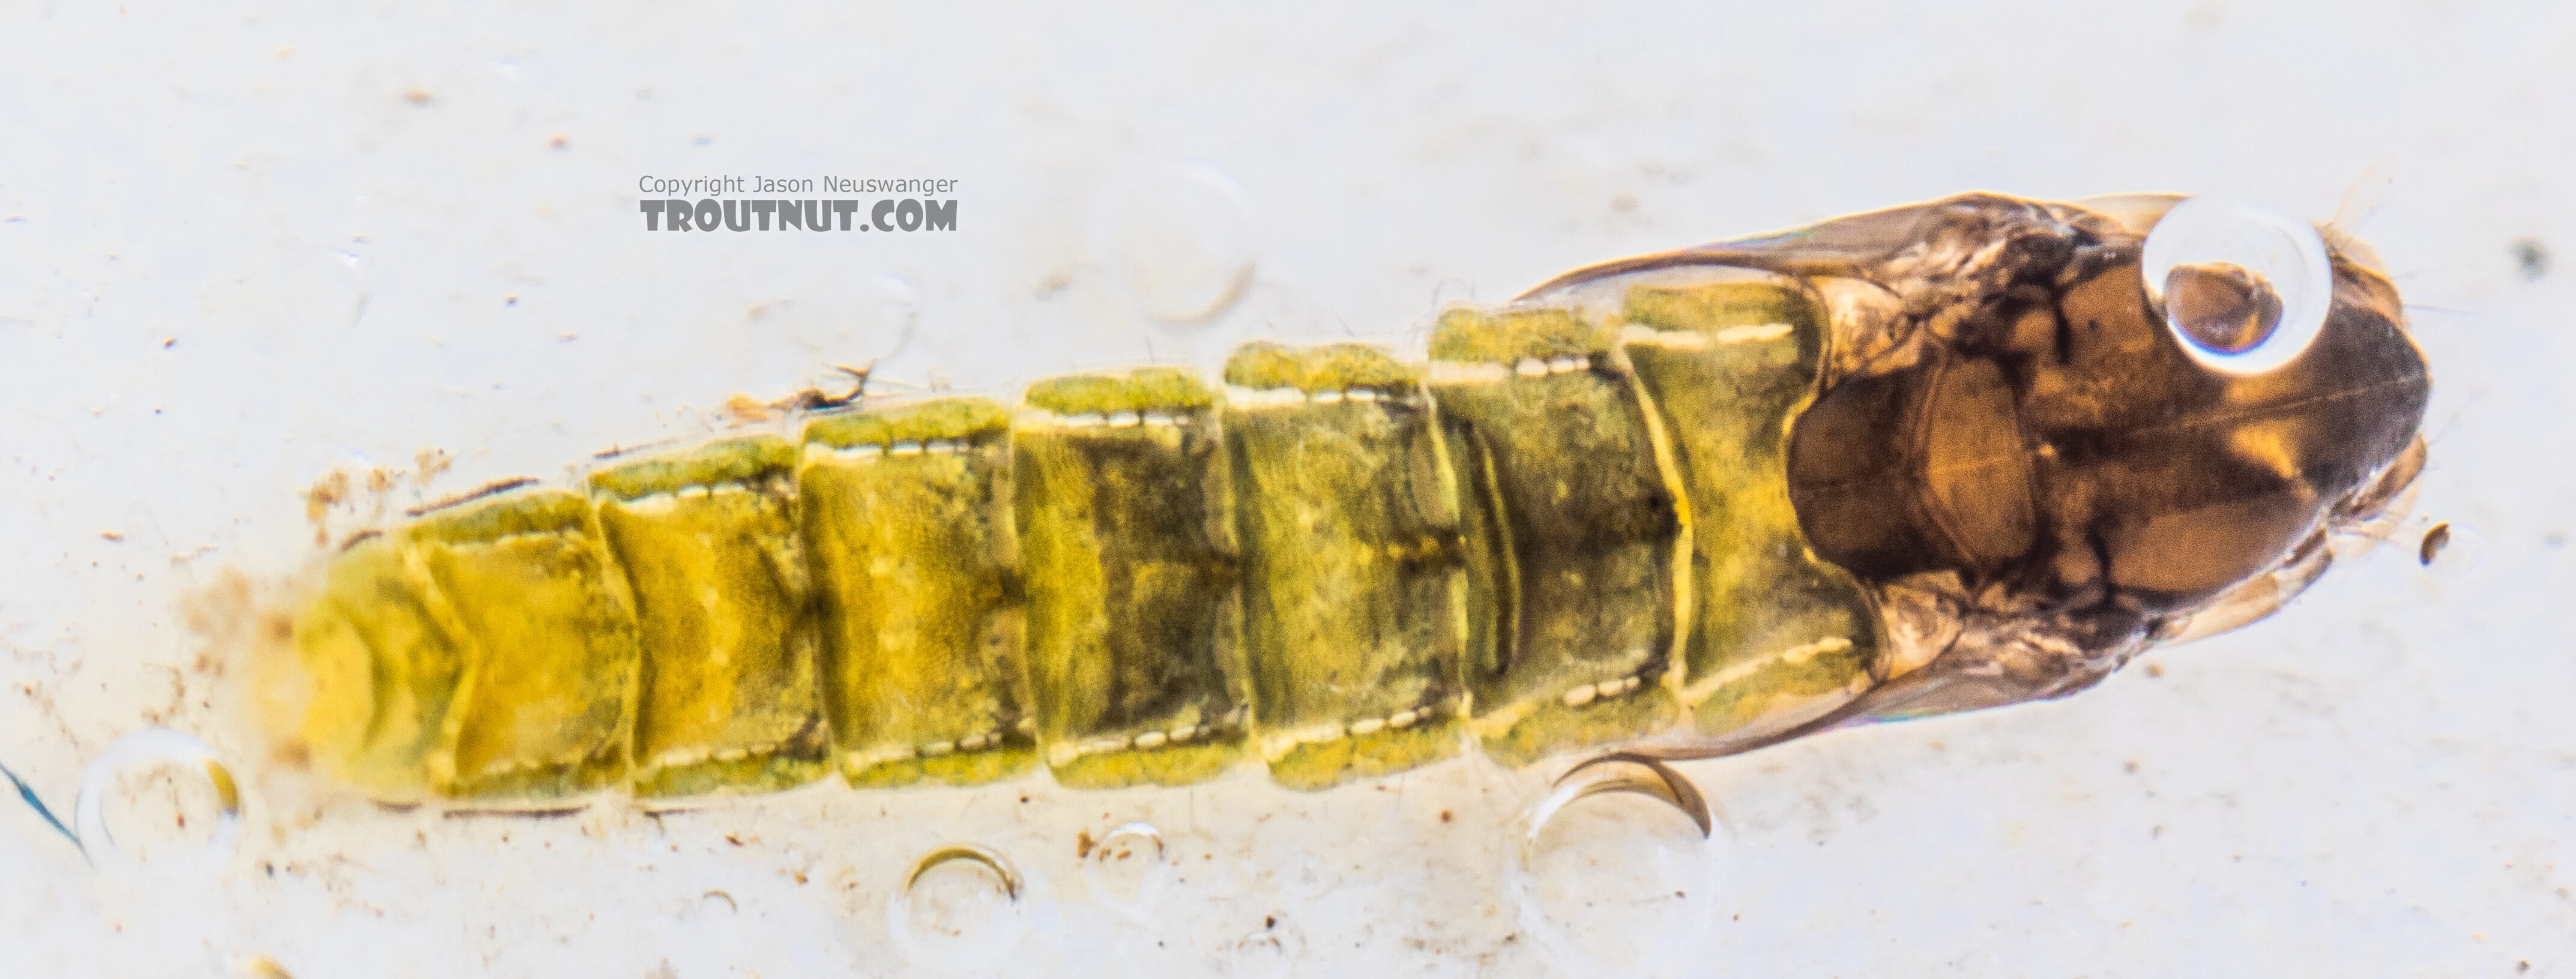 Chironomidae (Midges) Midge Pupa from the Yakima River in Washington